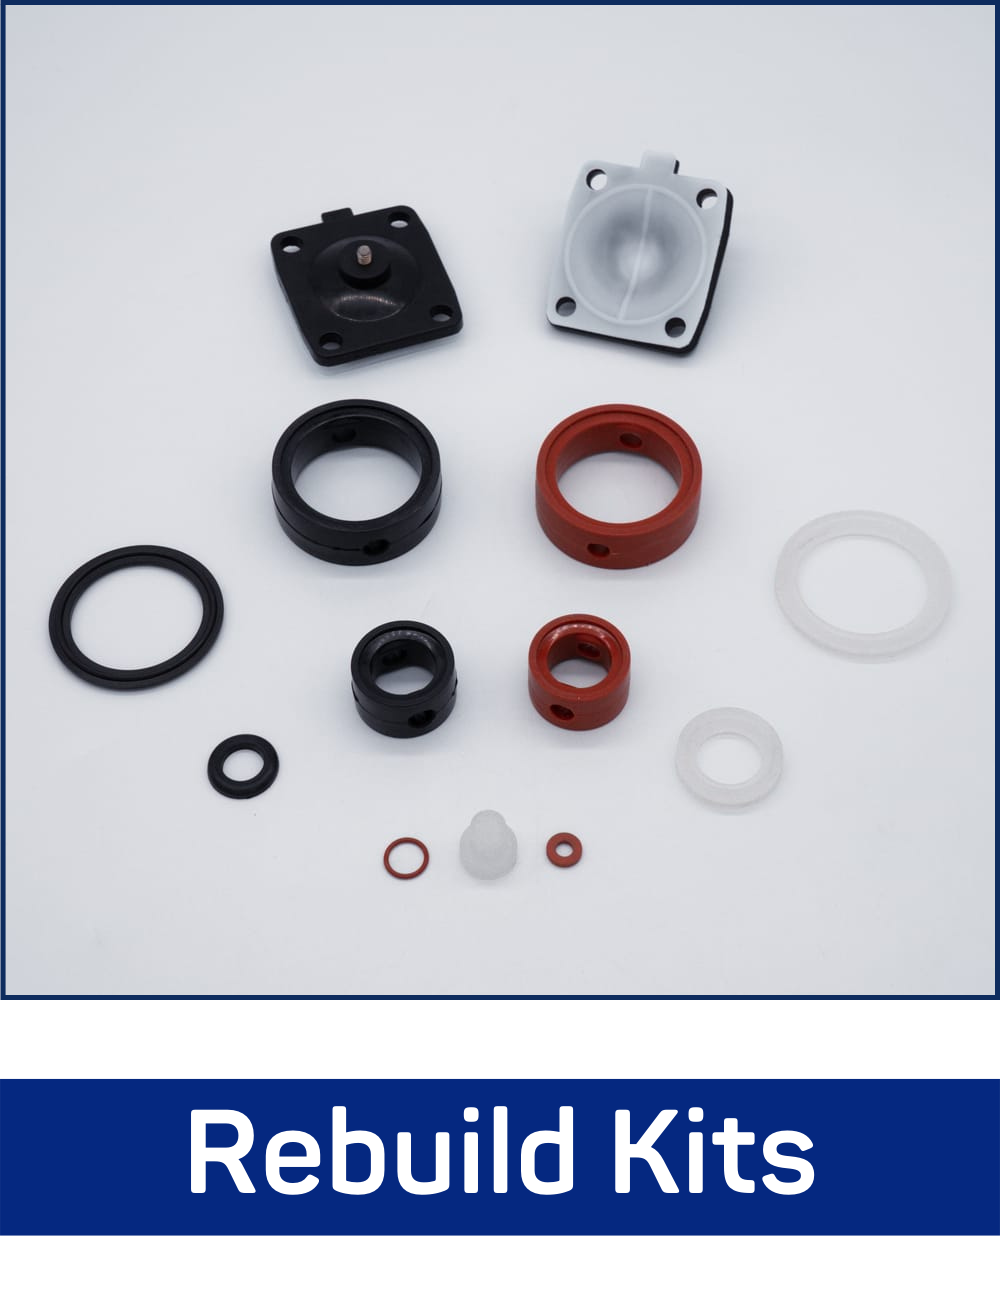 Rubber Rebuild Kits for Diaphragm Valve, Butterfly Valve, Sample Valve, Check Valve